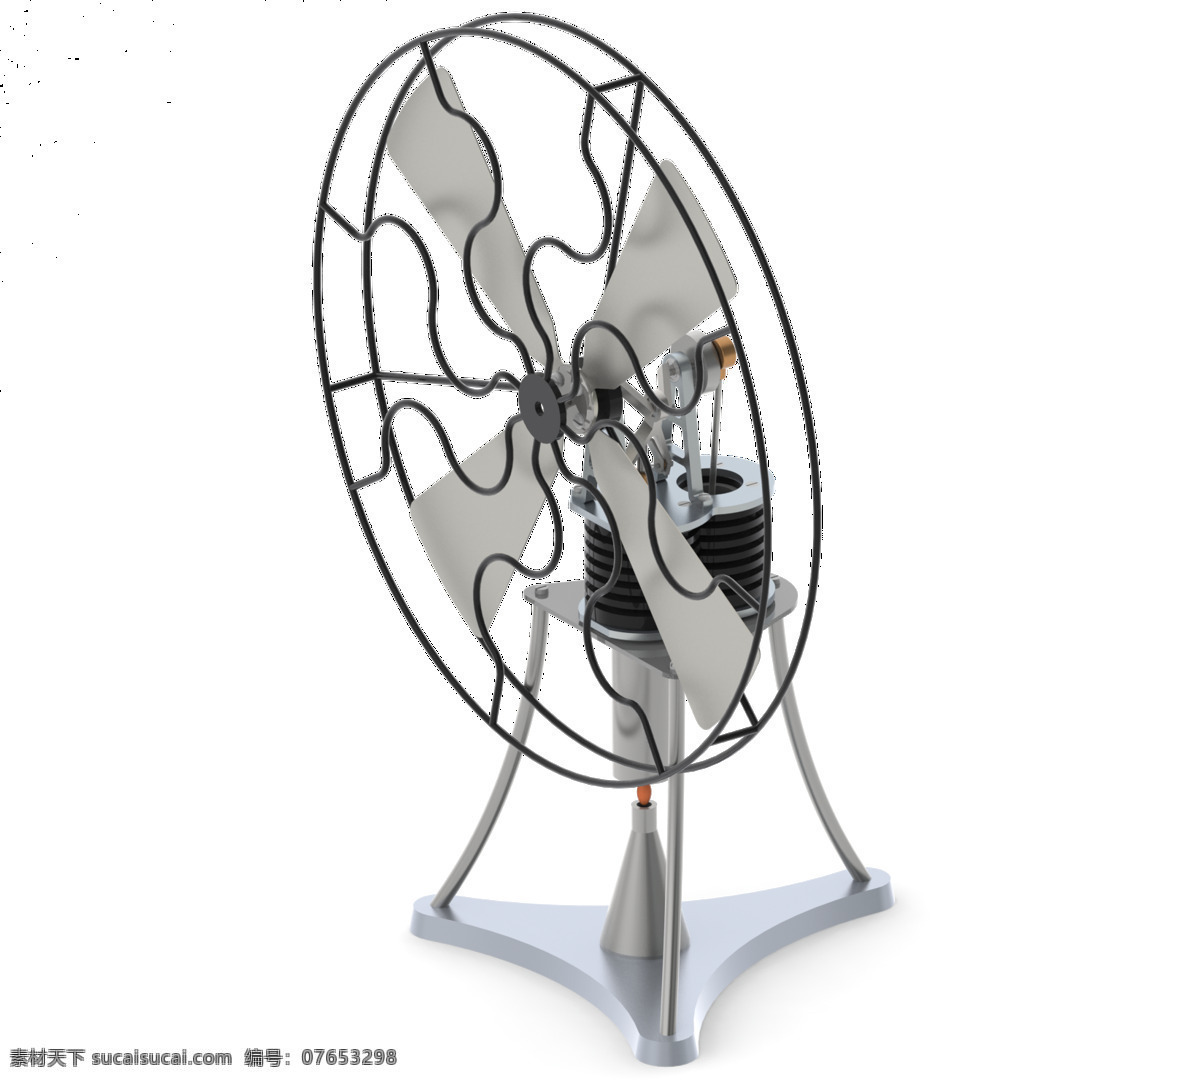 ko 斯特灵 发动机 风扇 ky免费下载 模型 3d模型素材 其他3d模型